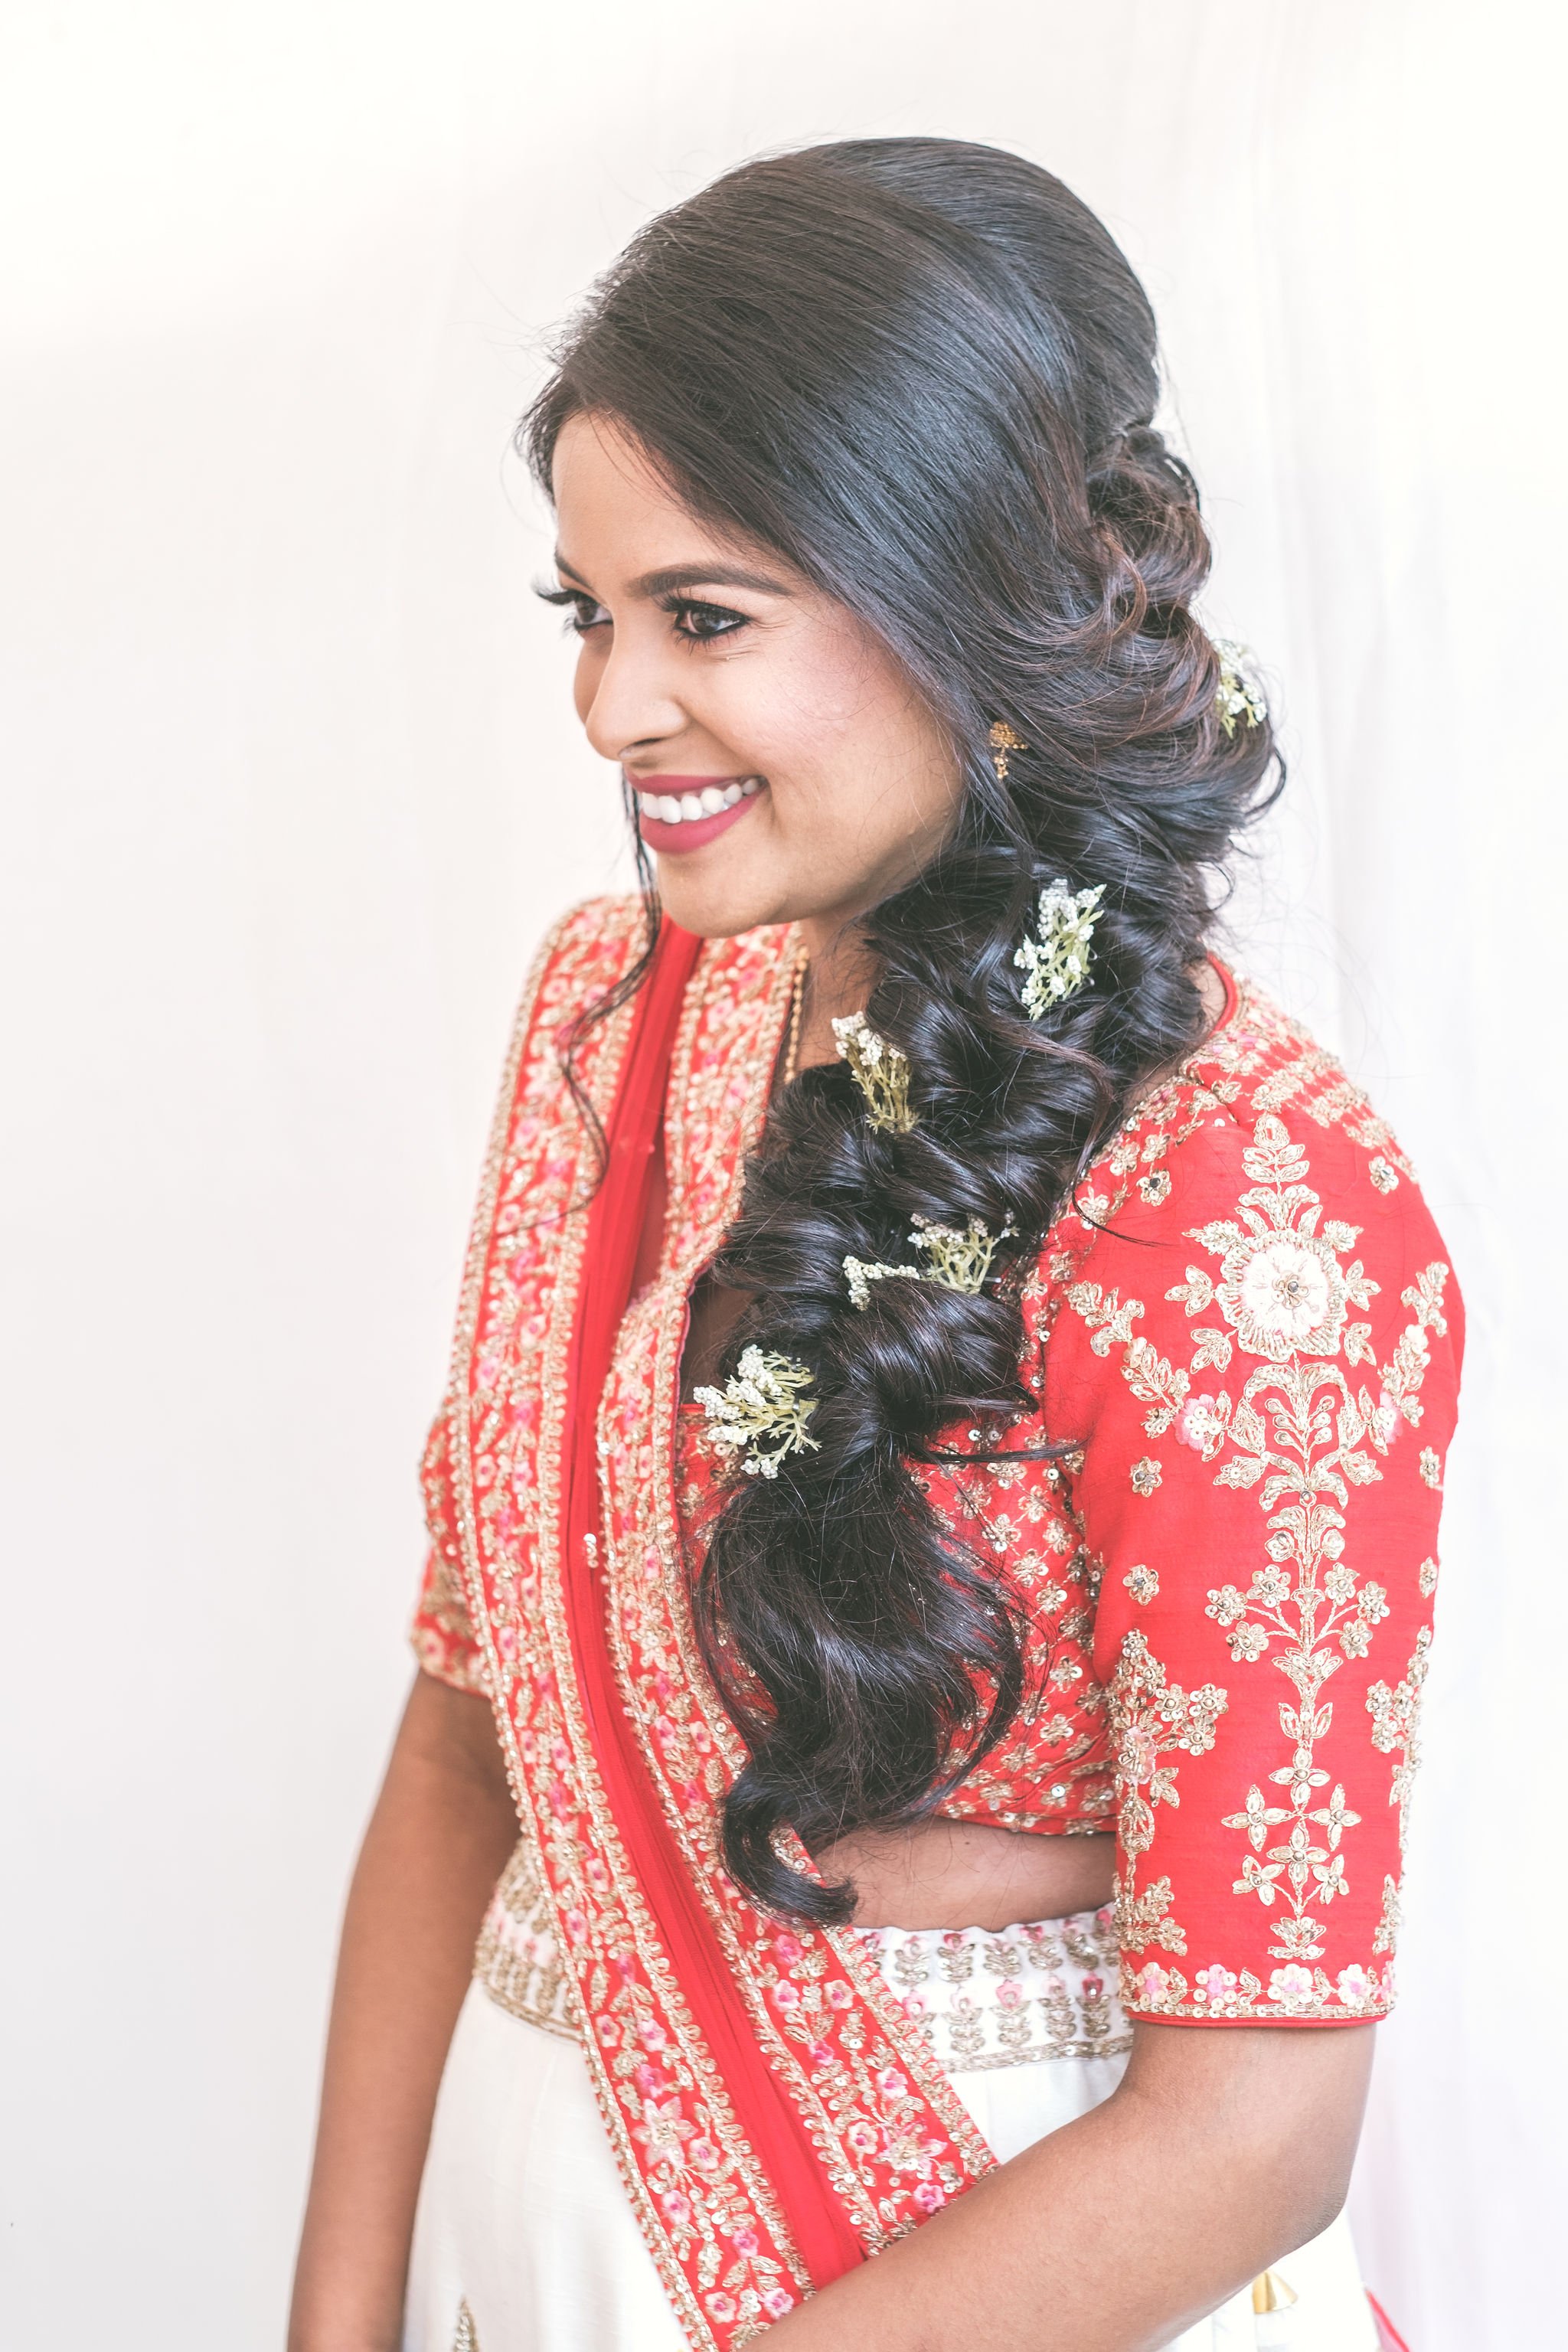 keralawedding #bridalmakeup #weddingreception #makeup #hairstyle  @shoshank_makeup | Instagram